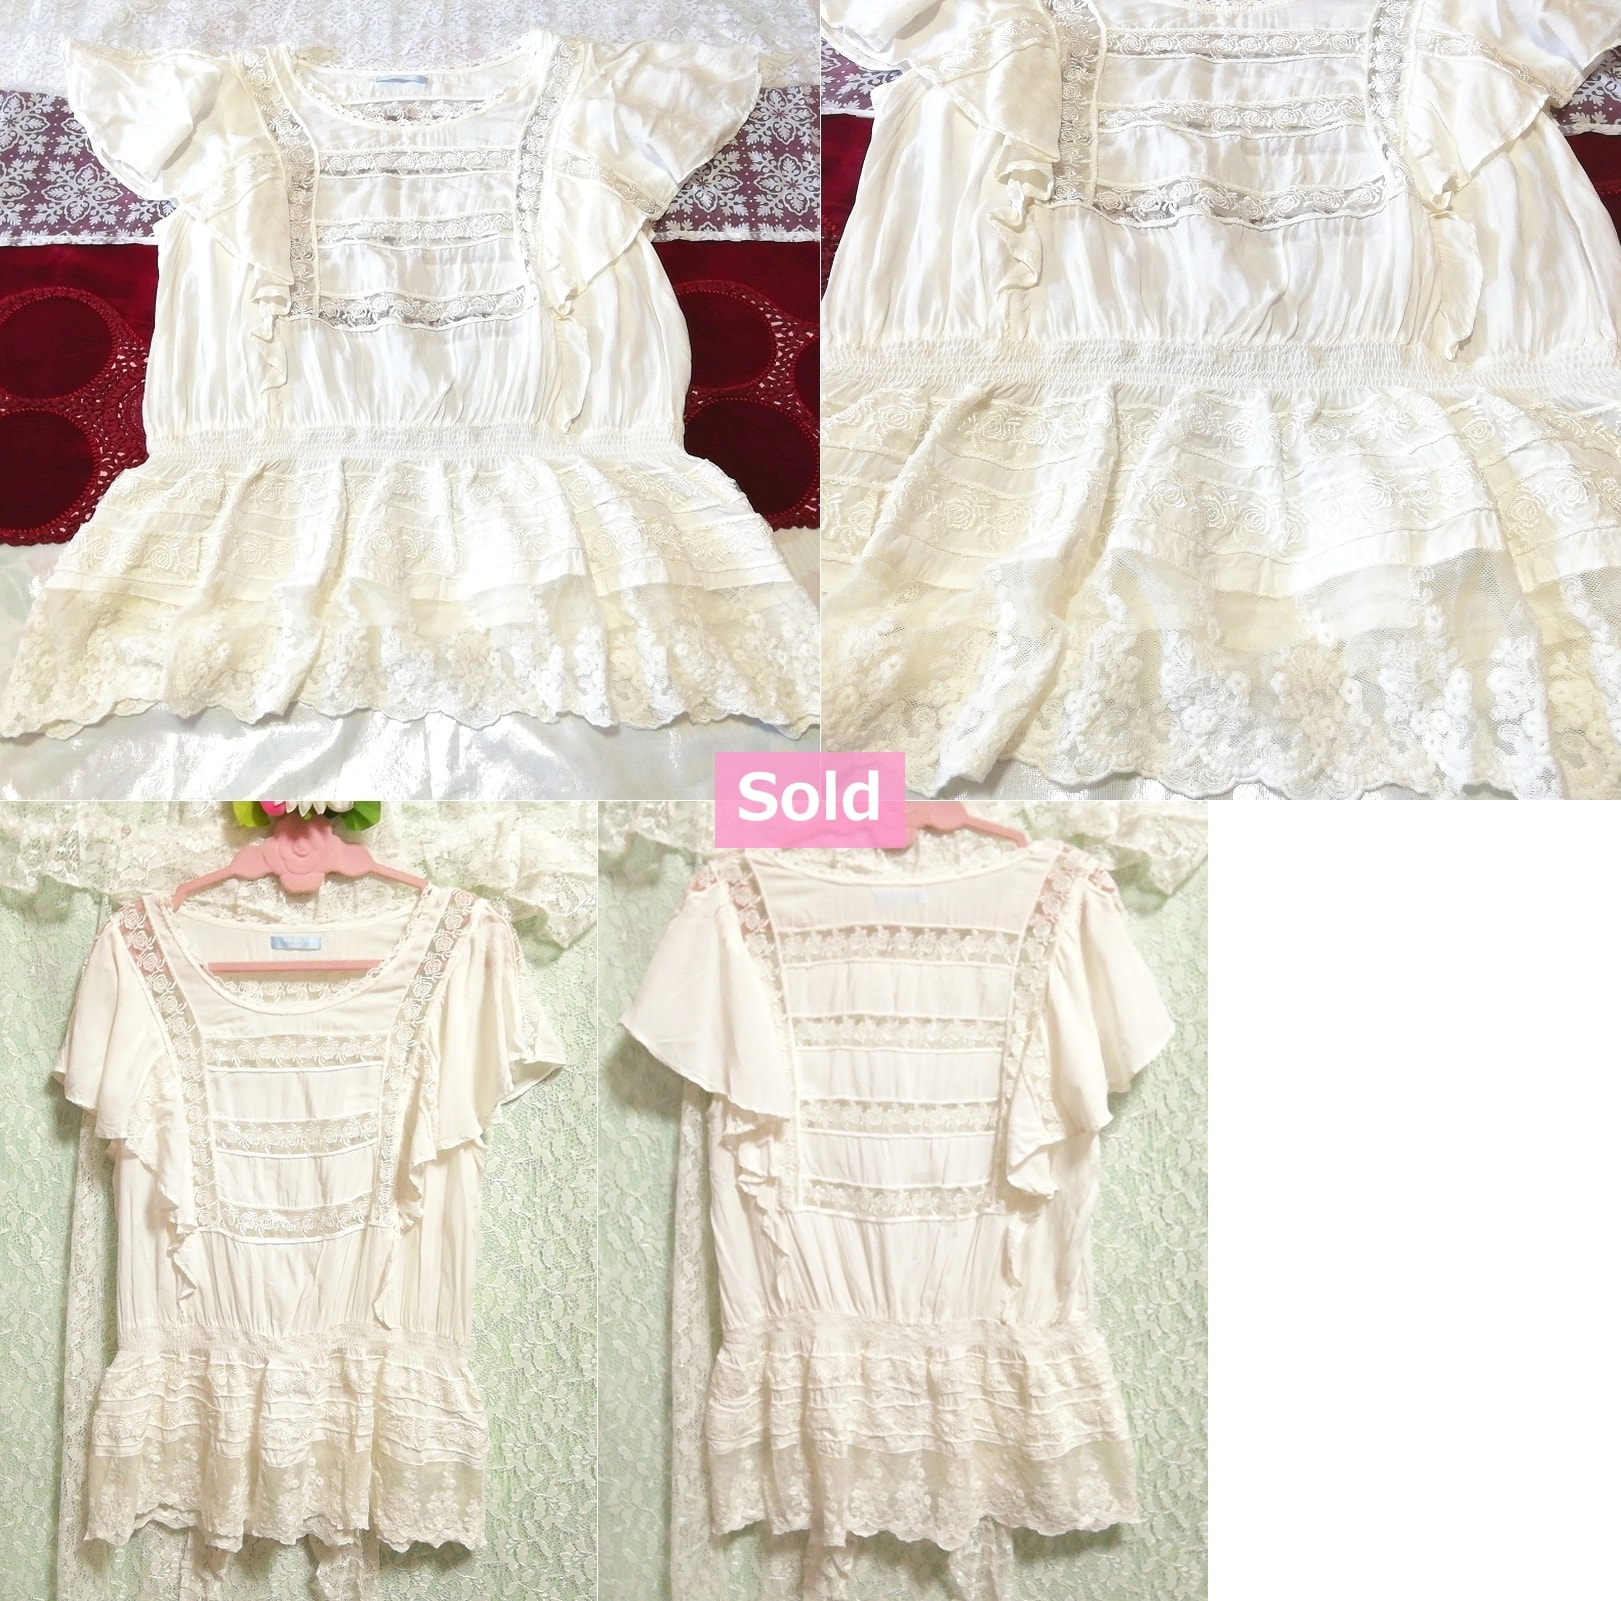 White rose lace short sleeve tunic negligee nightgown nightwear dress, tunic, short sleeve, m size